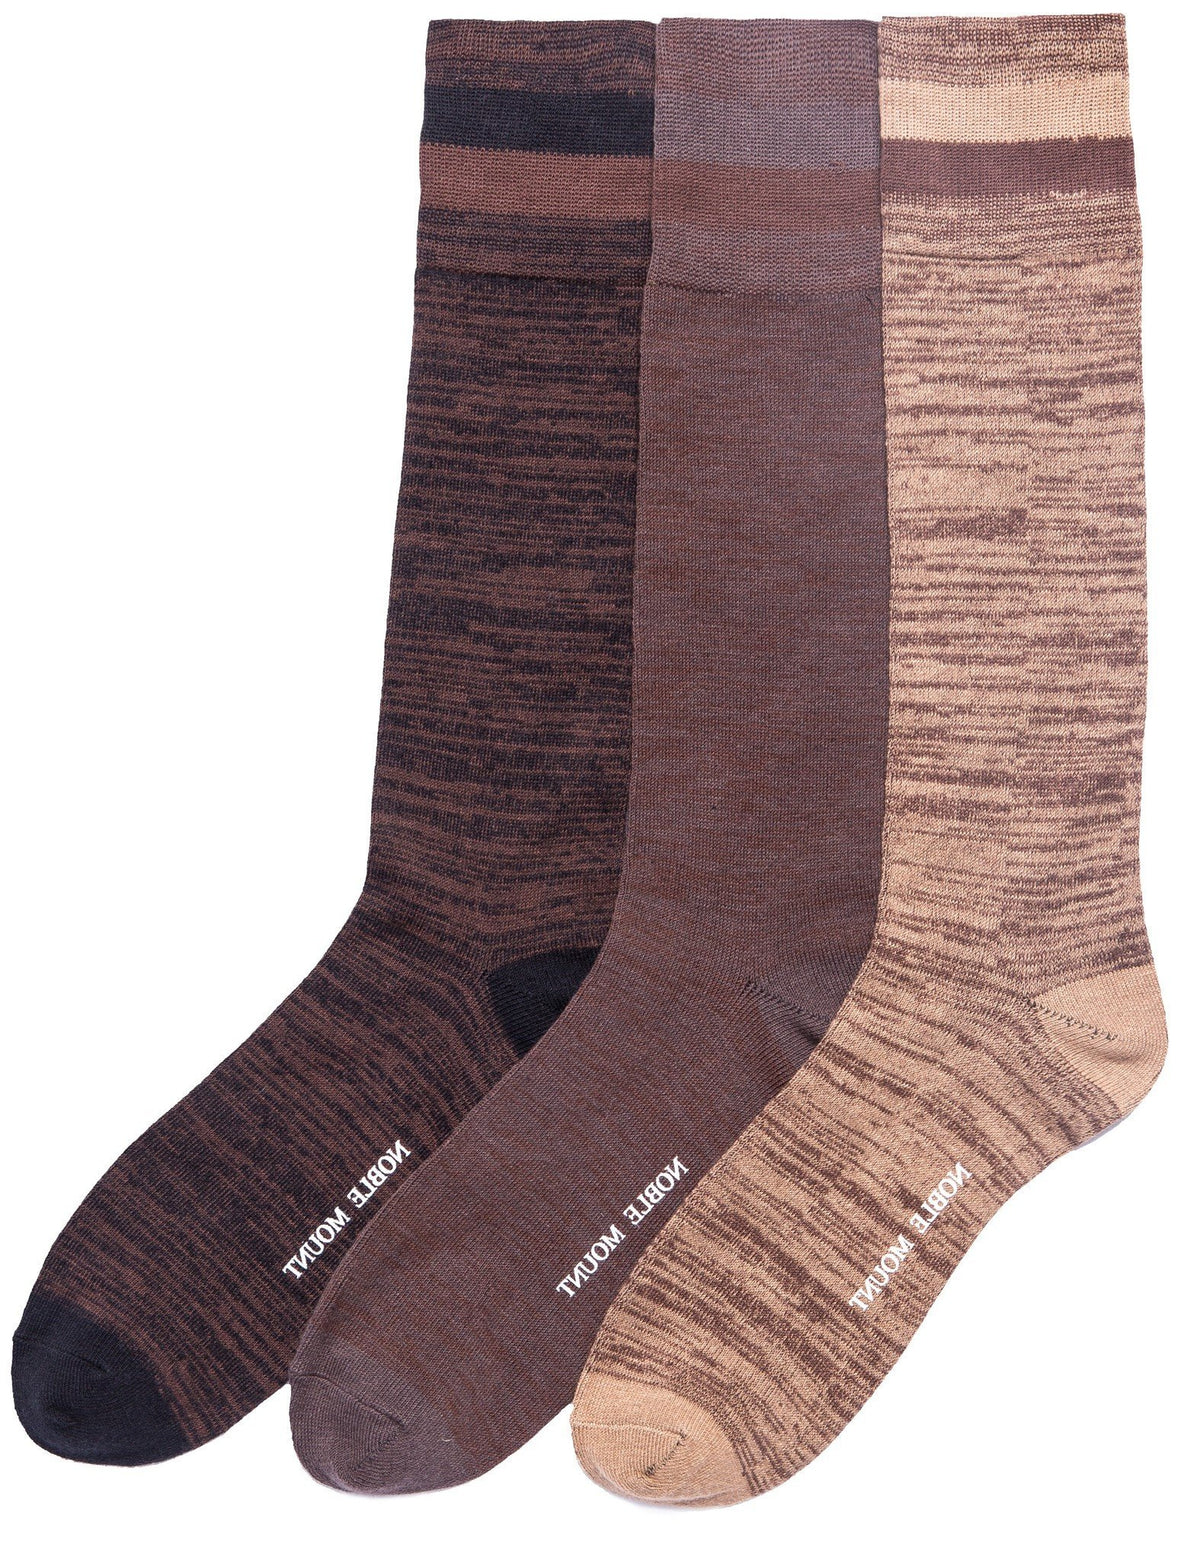 Men's 100% Acrylic Soft Marled Dress Socks 3-Pack - Set A3